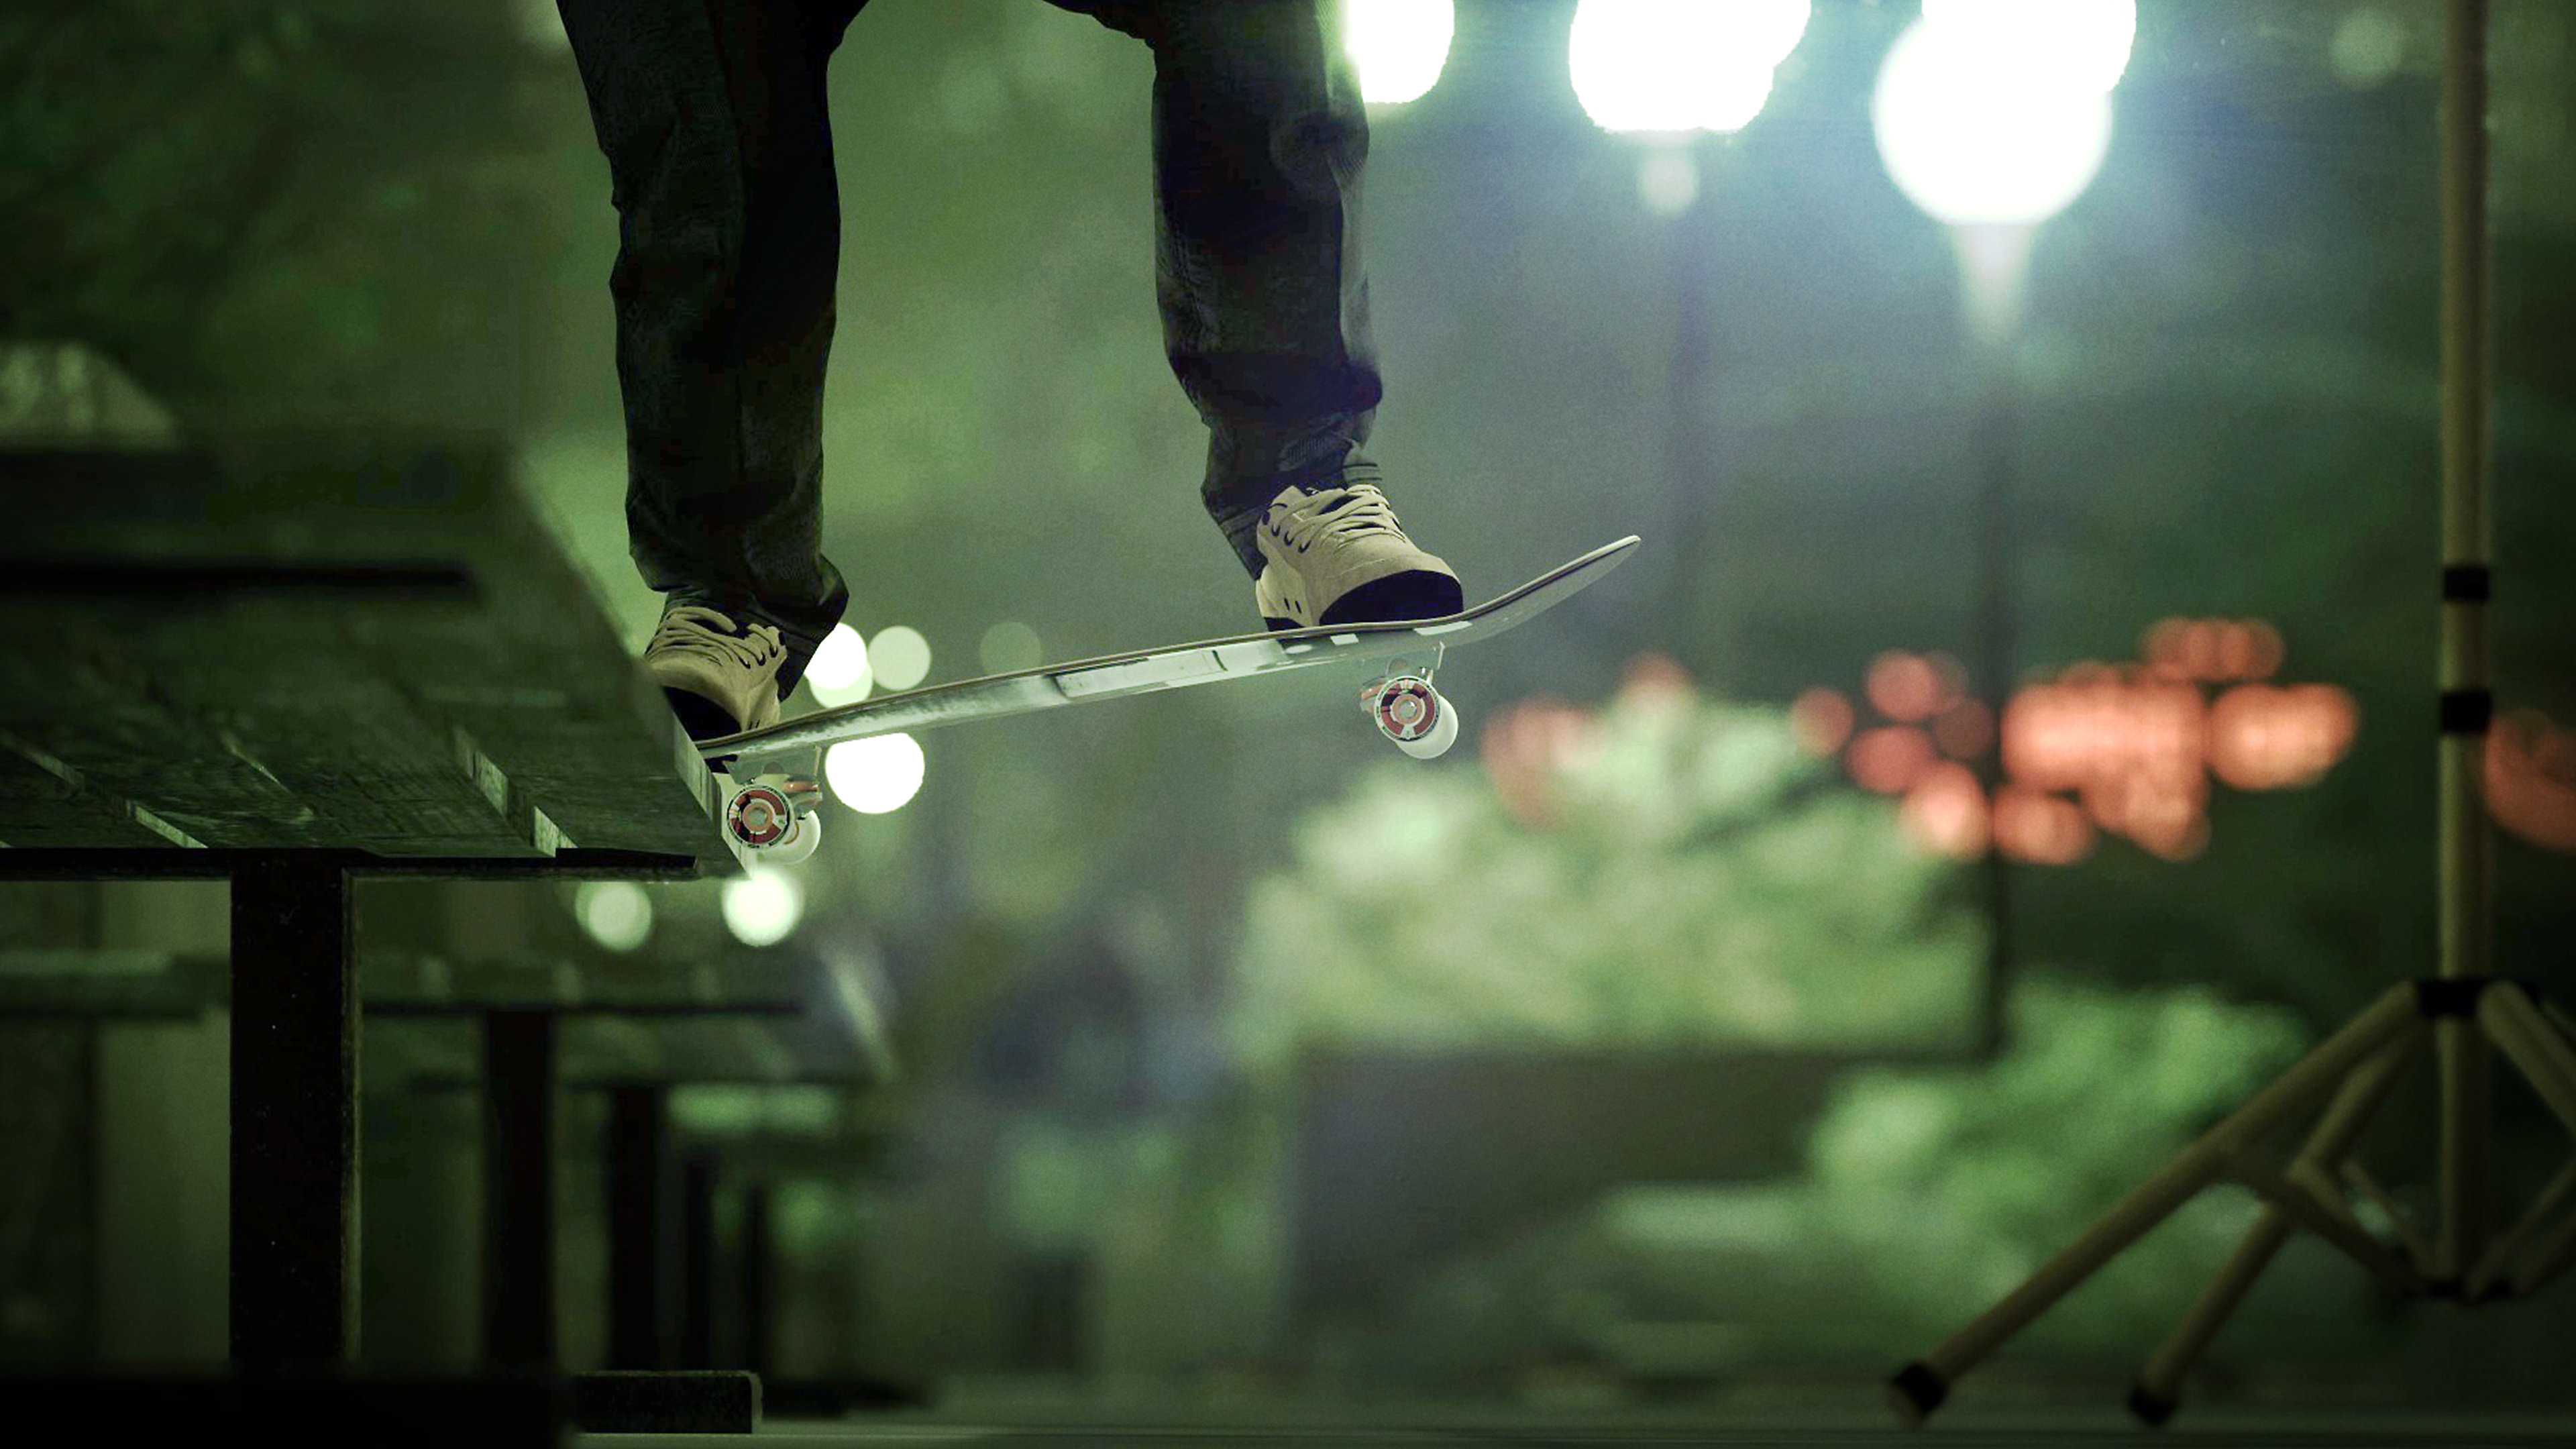 Captura de pantalla de Session: Skate Sim que muestra un skater raspando un banquillo